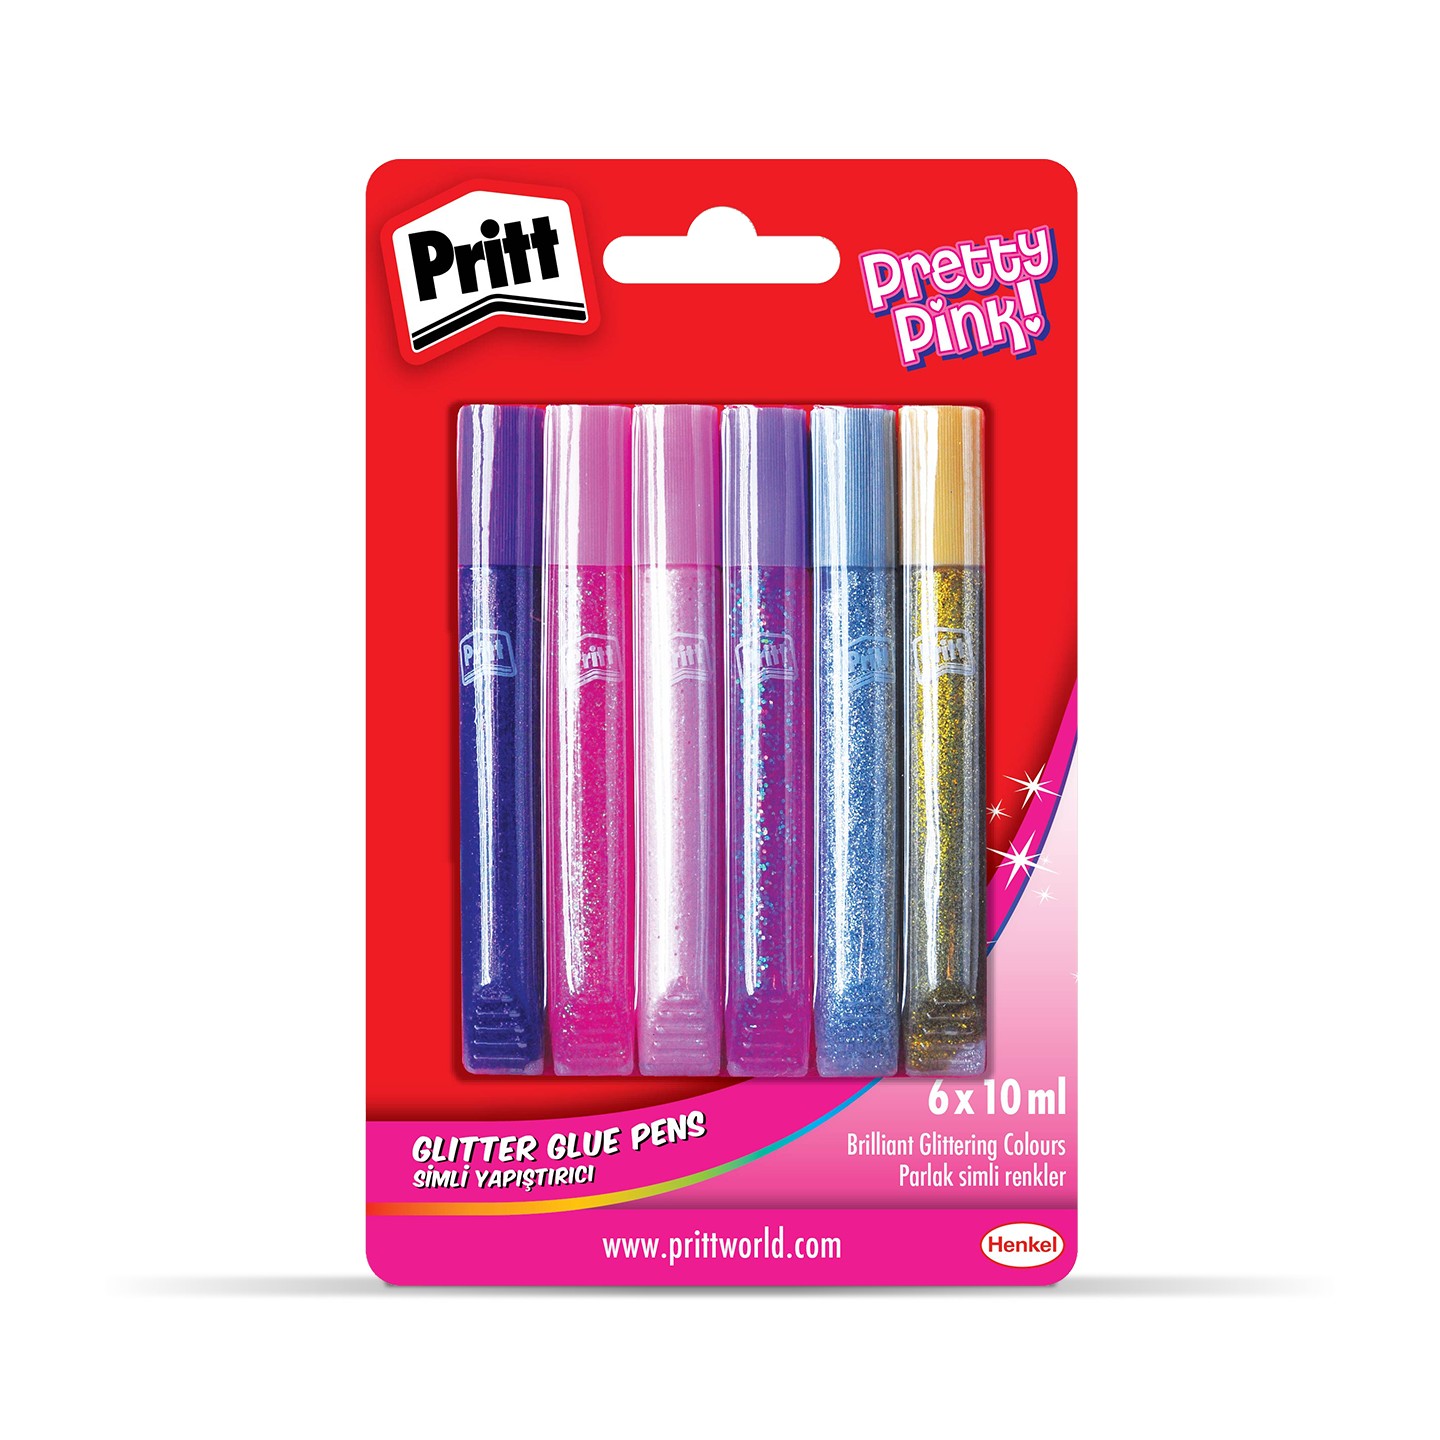 Pritt Glitter Glue Pens - Pritt